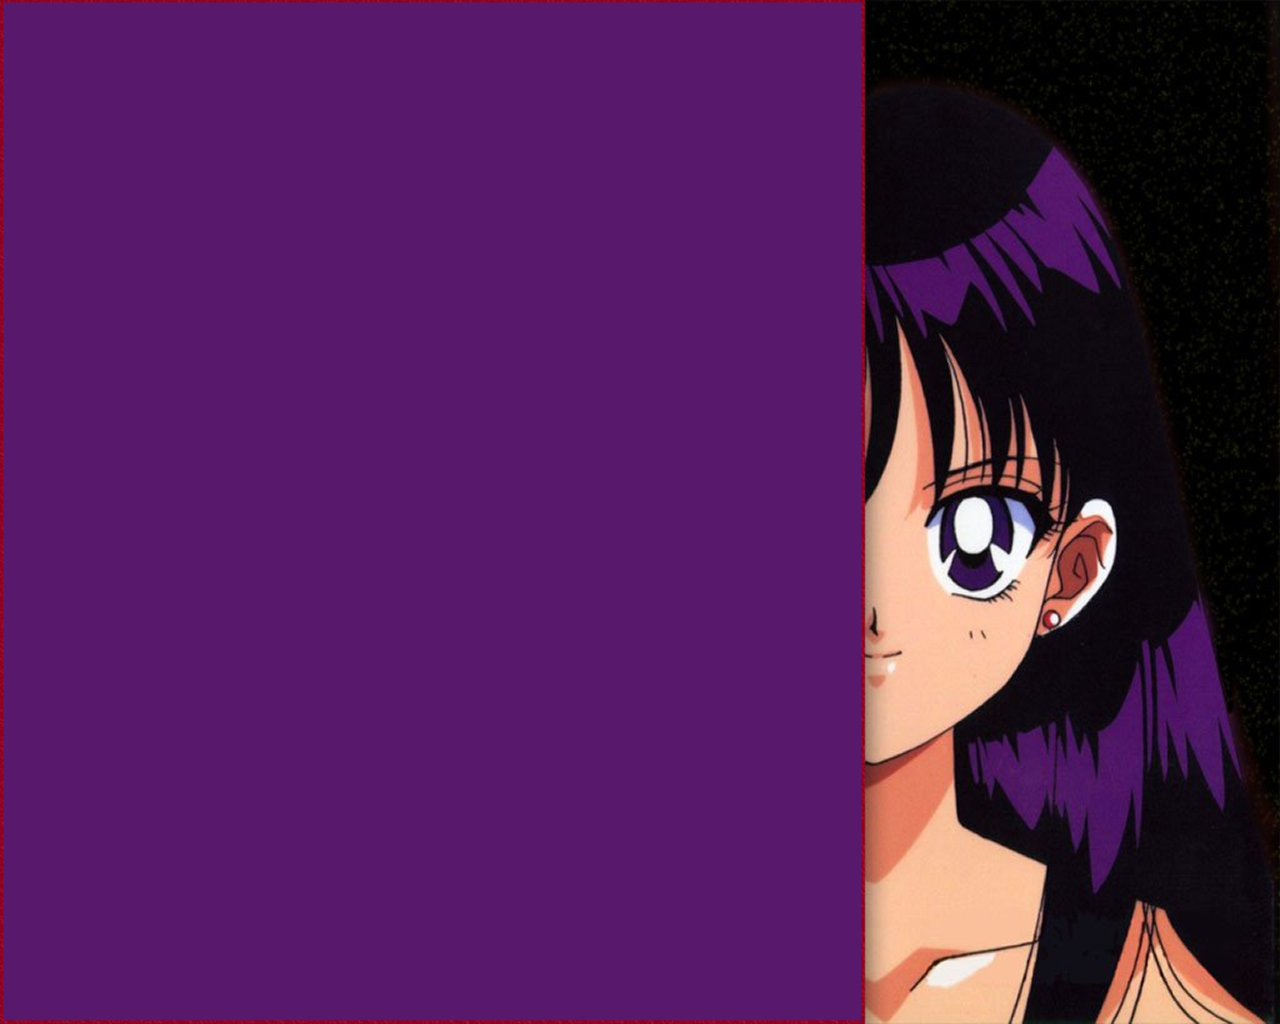 download wallpaper: Sailor Moon wallpaper